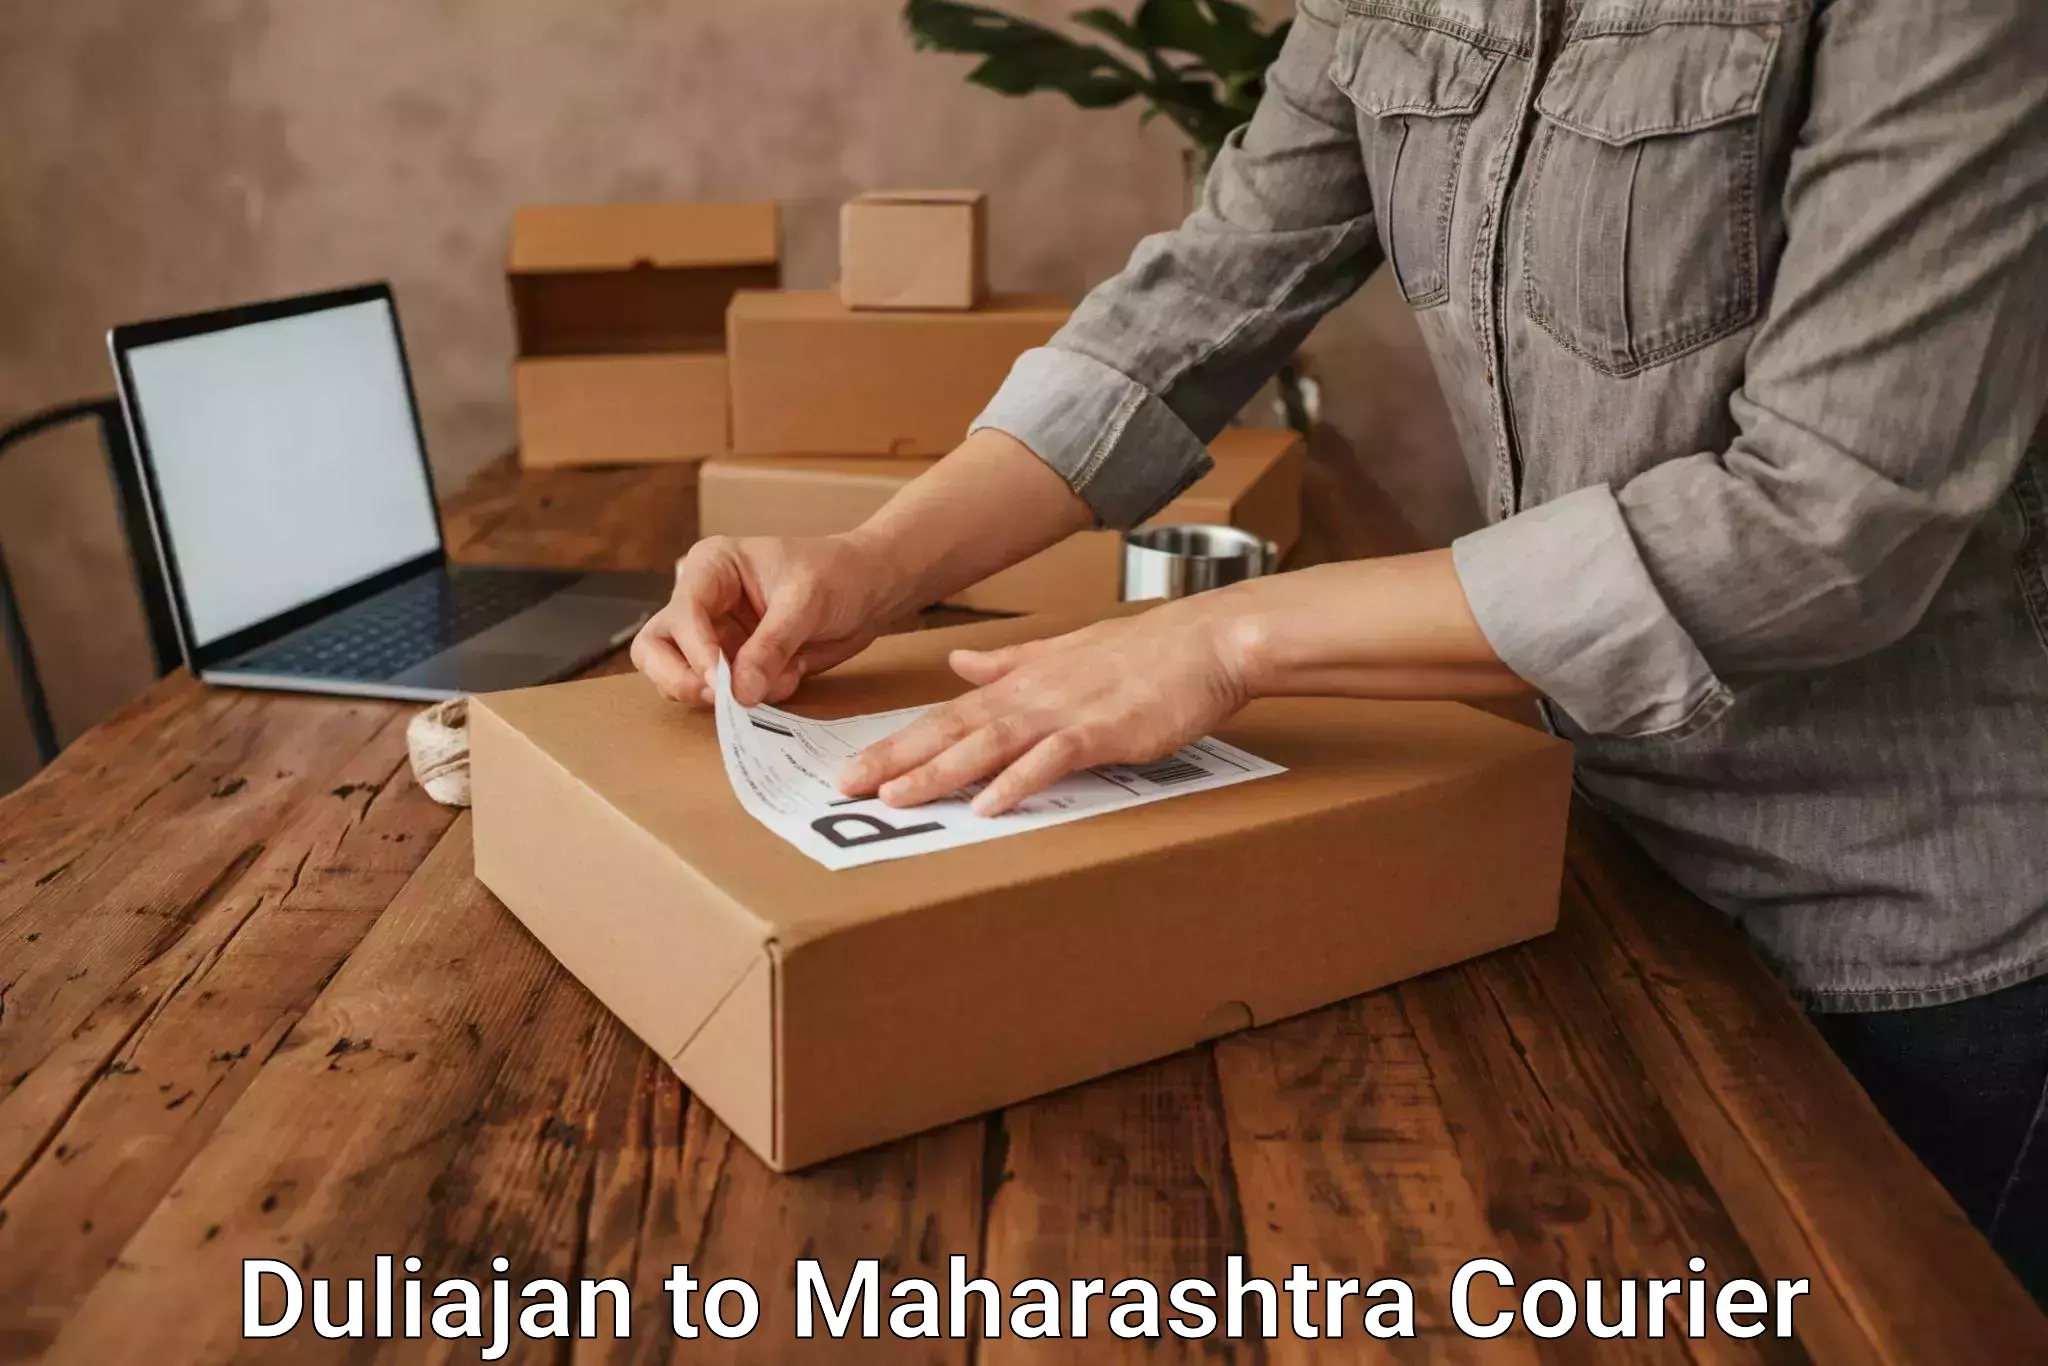 User-friendly courier app Duliajan to Aurangabad